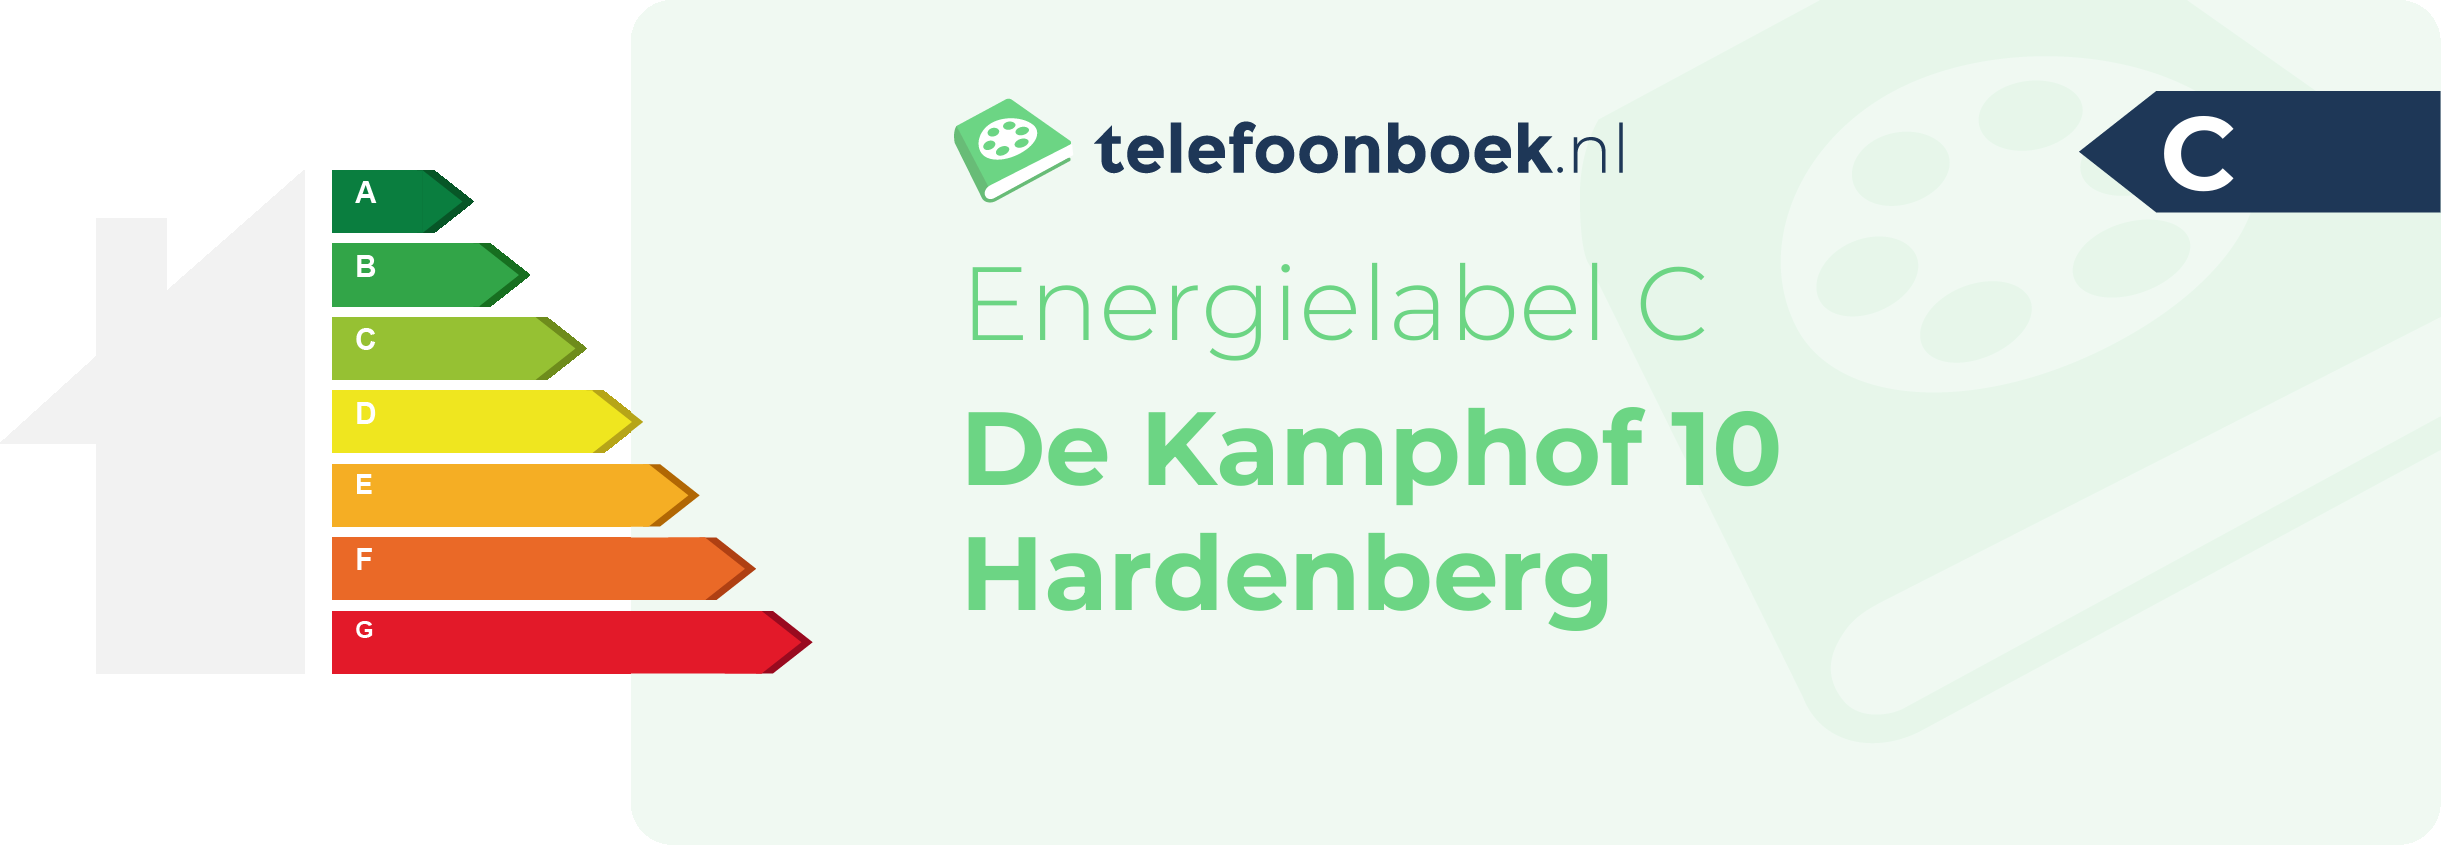 Energielabel De Kamphof 10 Hardenberg